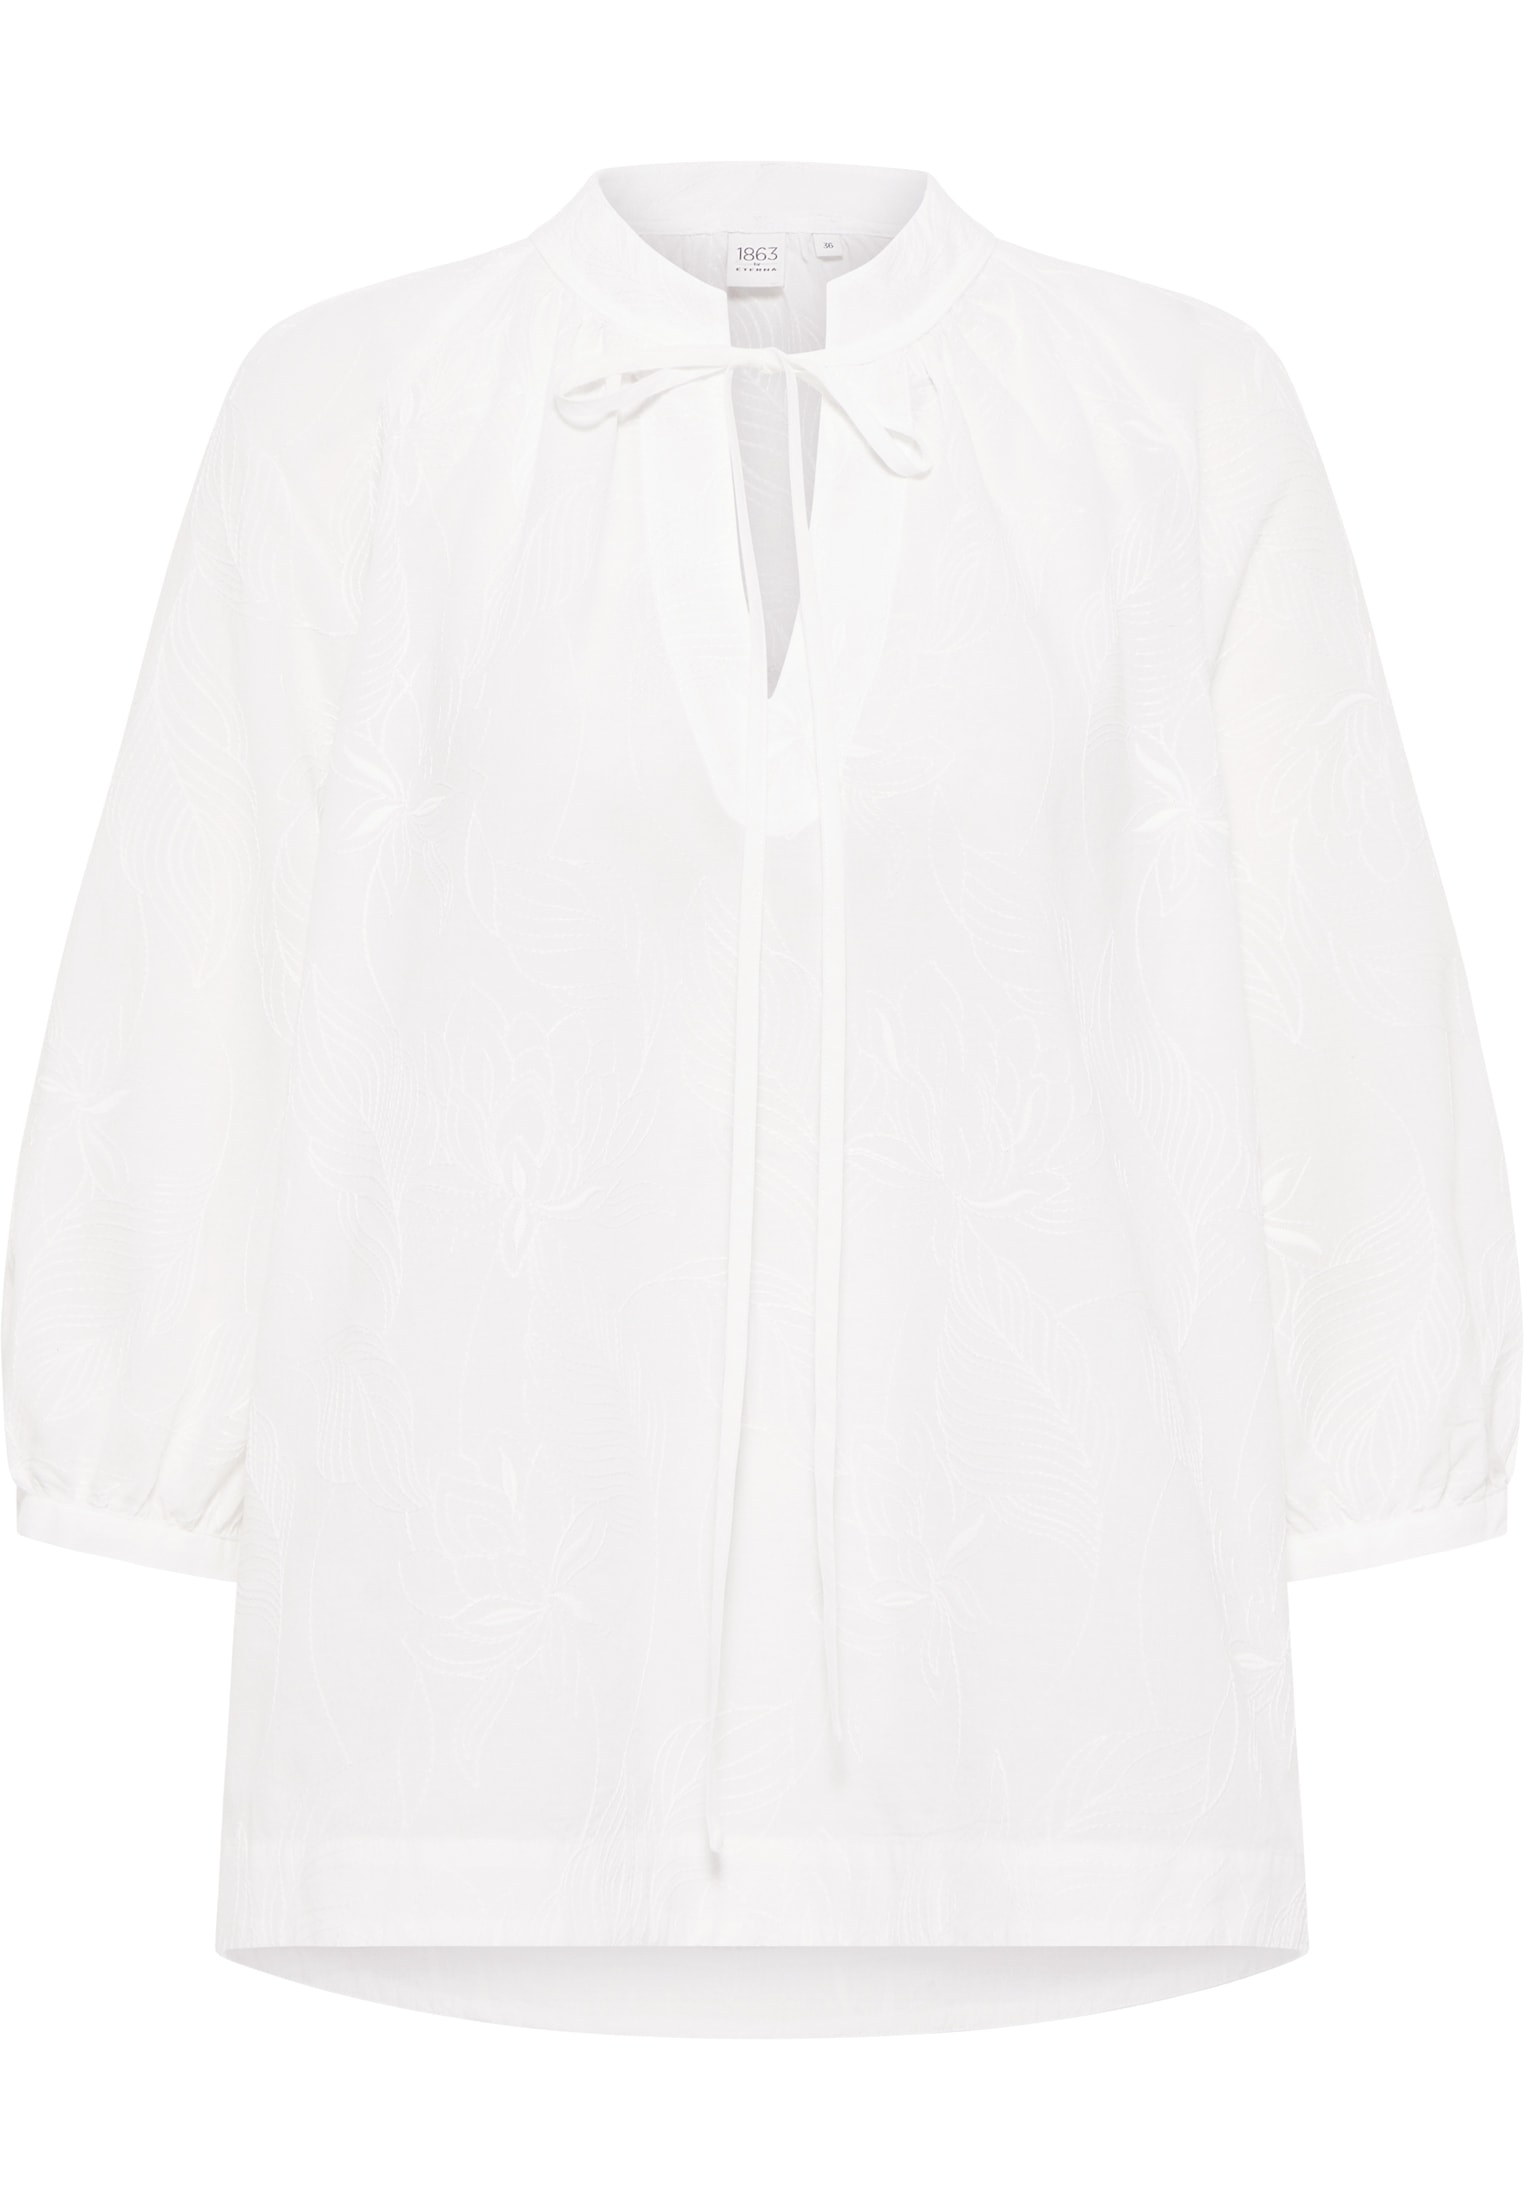 T-shirt blouse in white plain